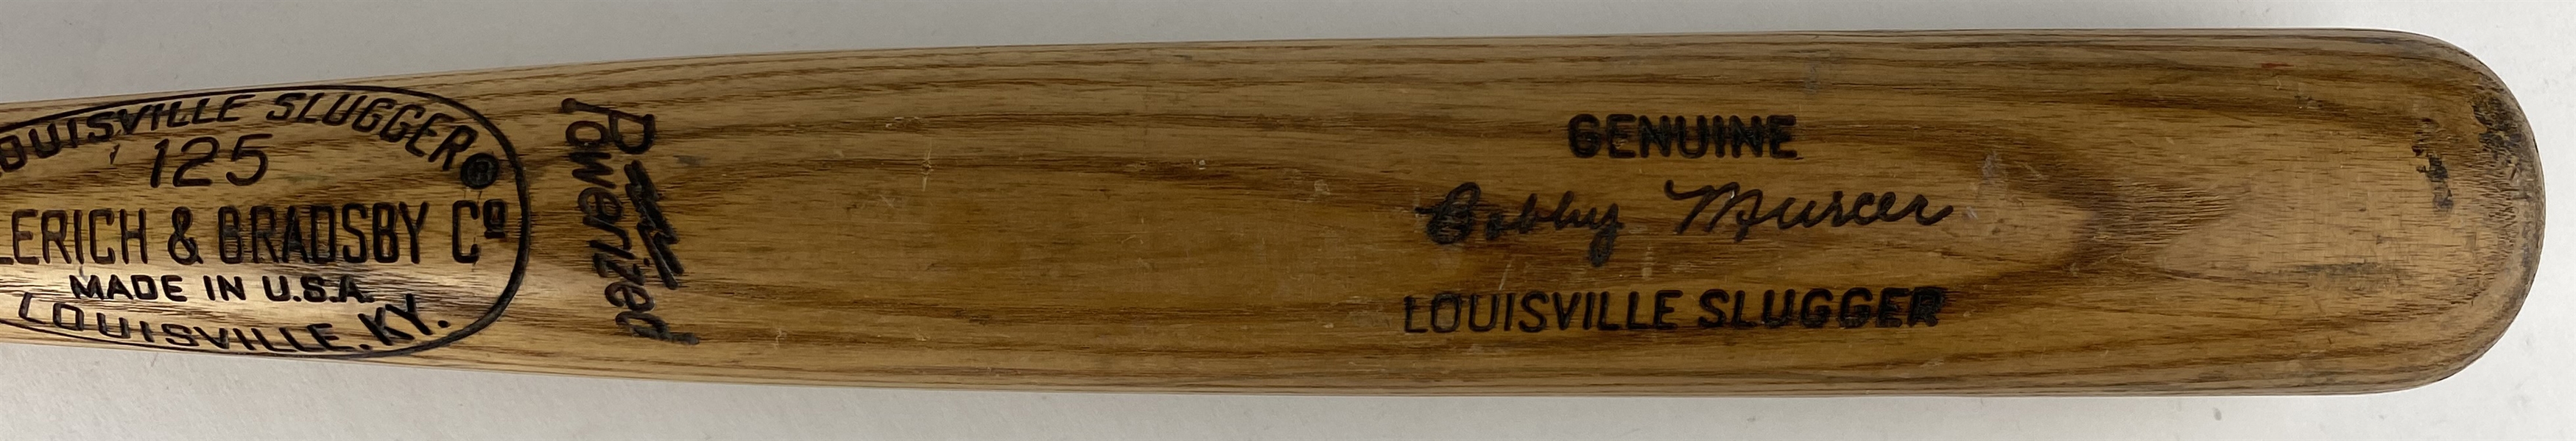 Bobby Murcer Game-Used 1970-1971 Louisville Slugger Bat - PSA/DNA GU 8.5